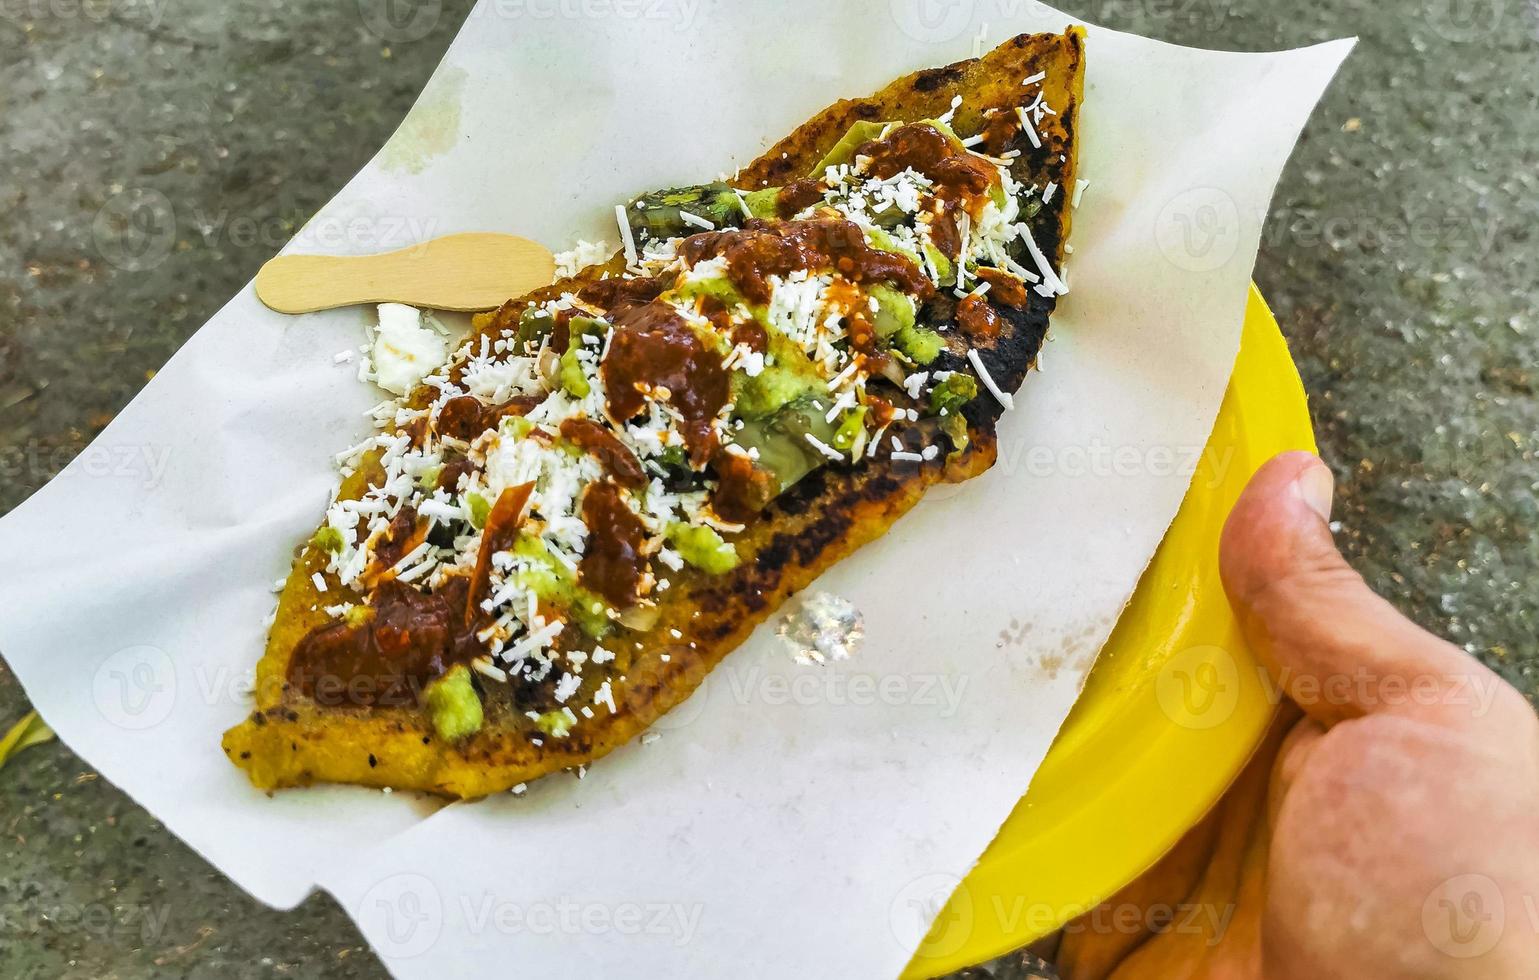 comida mexicana tlakobananas tlakojos de massa de banana molho picante méxico. foto